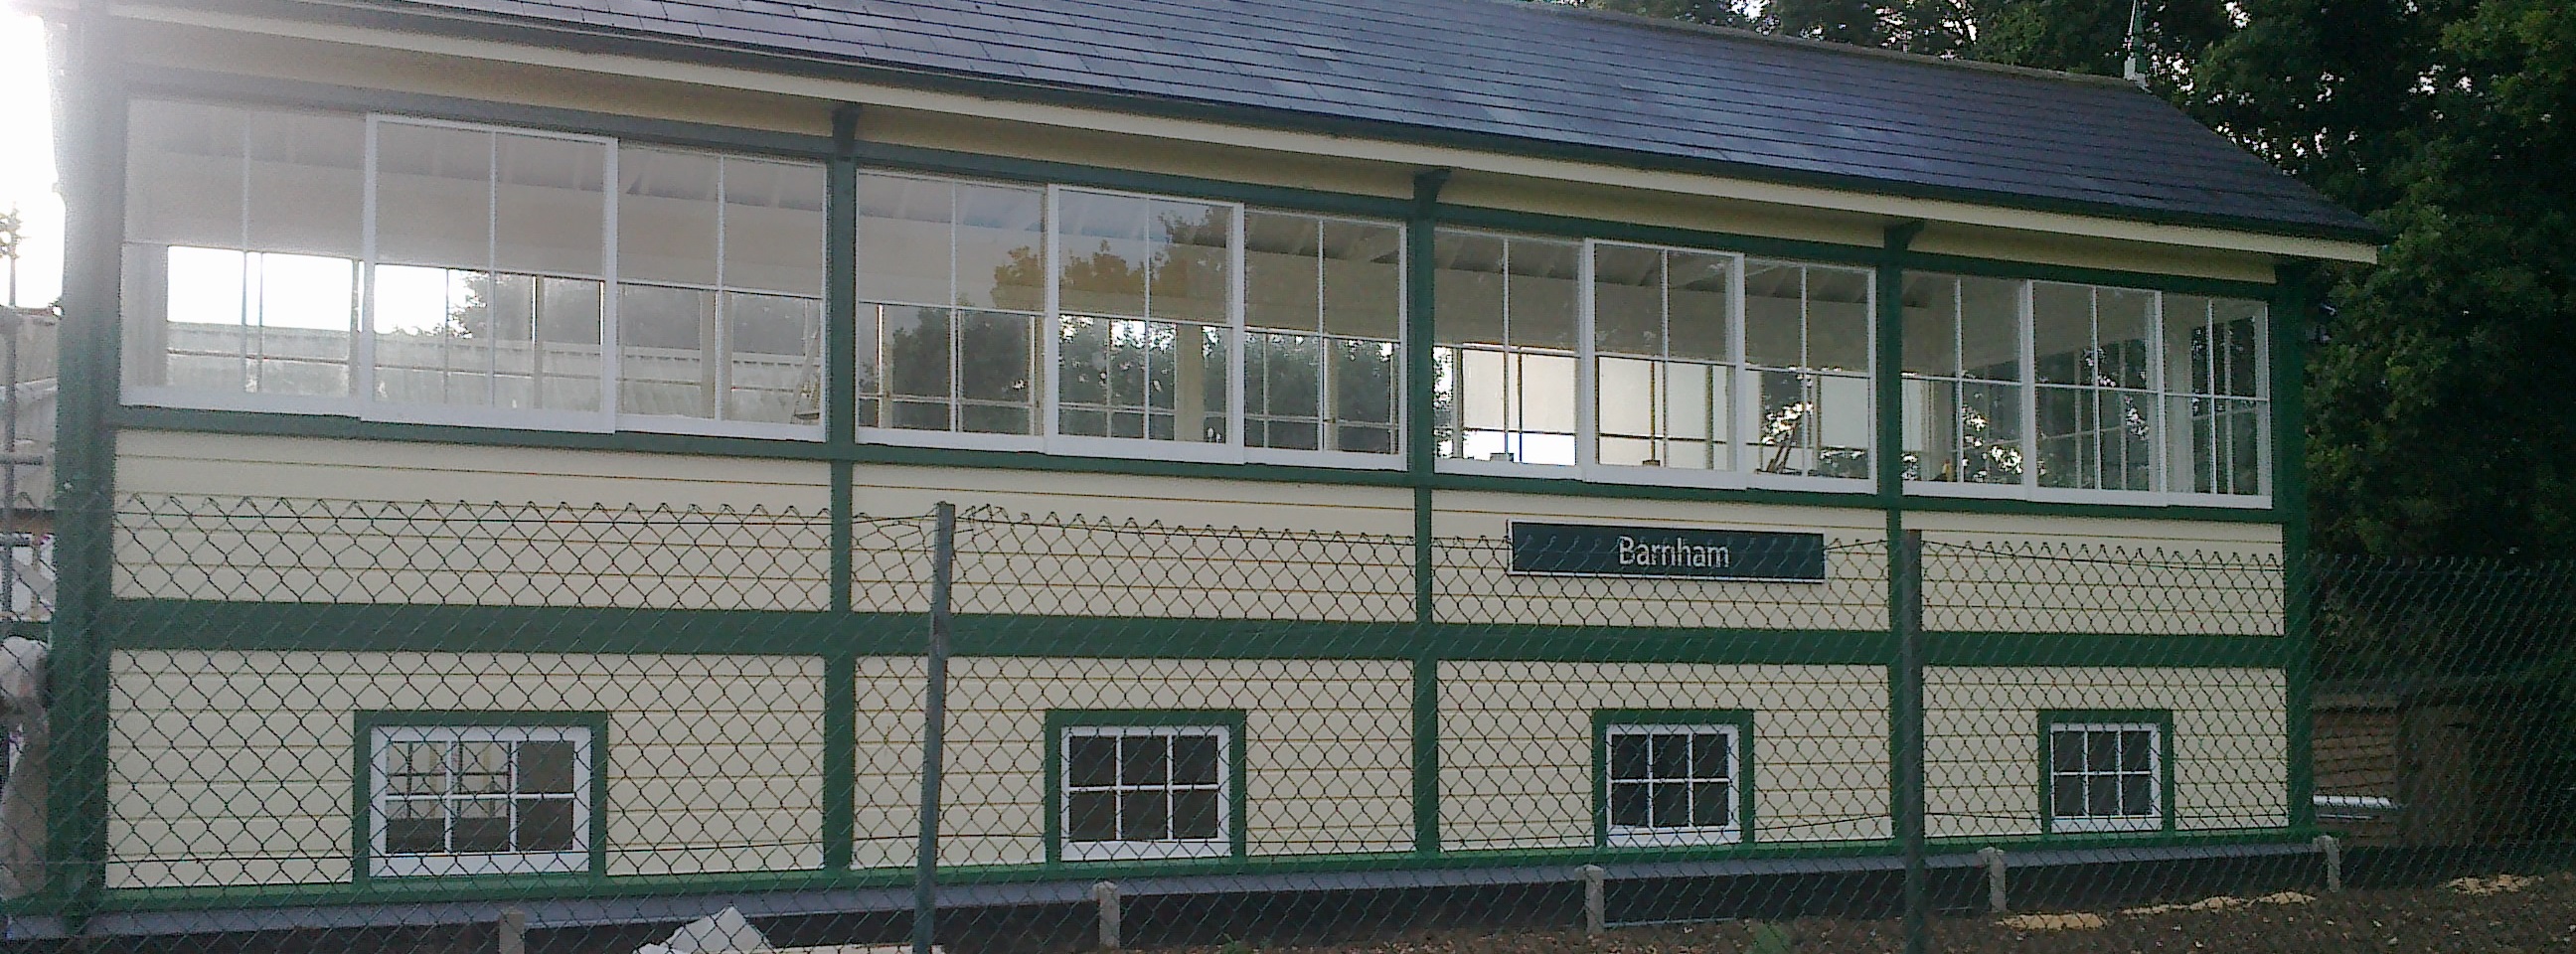 Bognor Regis Model Railway Club